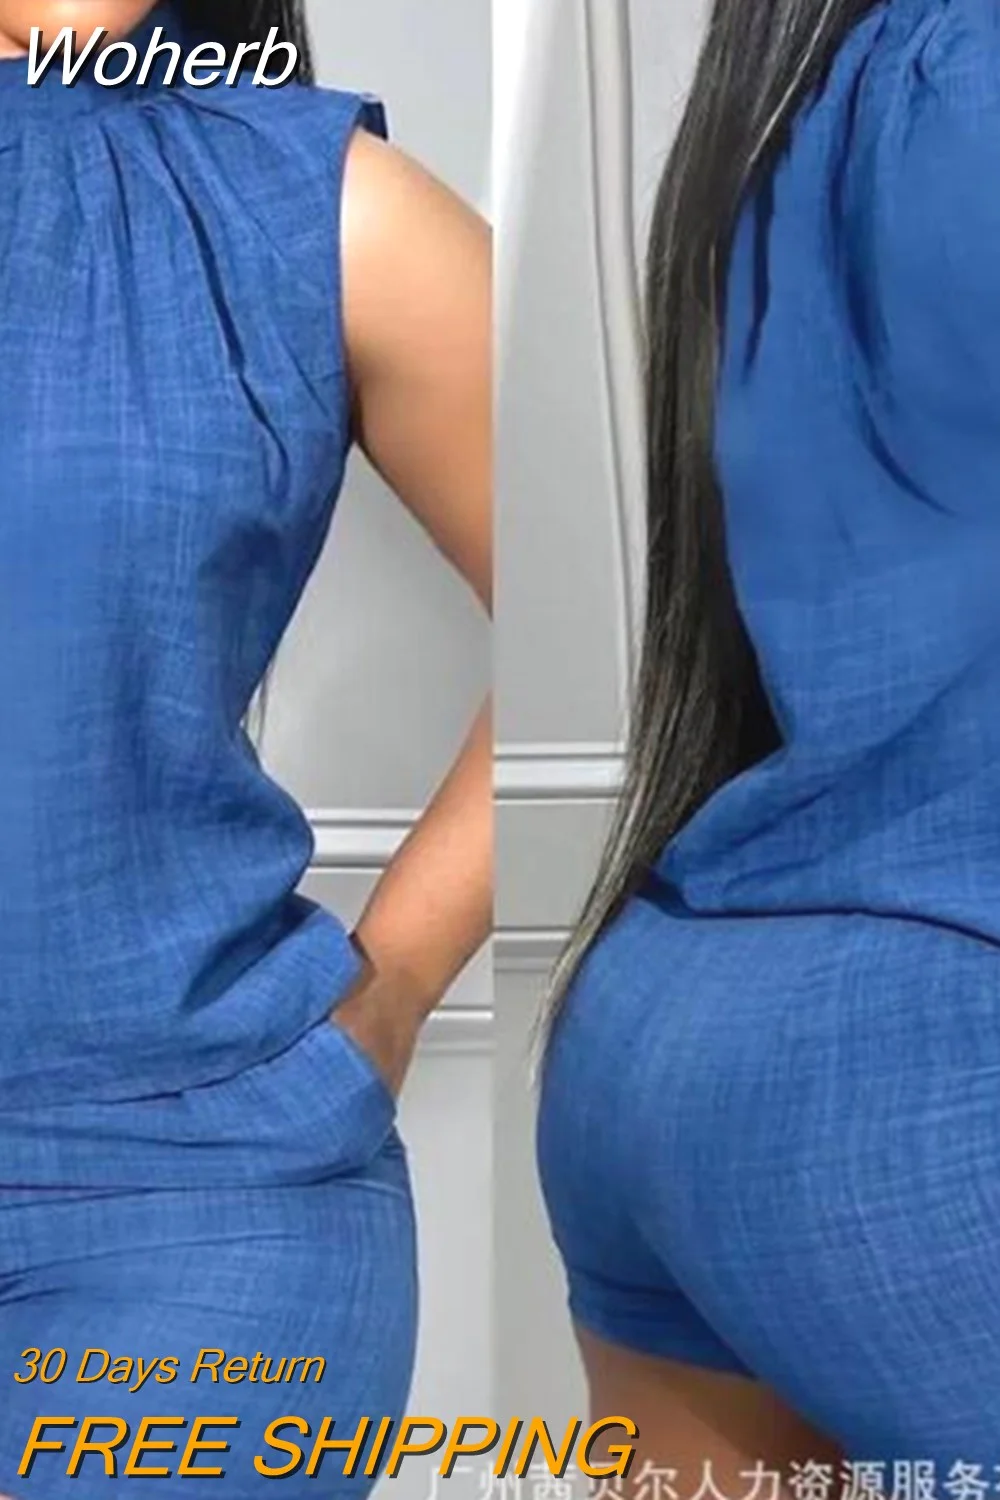 Woherb Women 2pcs Clothes Suit Sleeveless Abstract Print Casual Tank Top & Shorts Set Camis Tanks Tops Shorts Pants